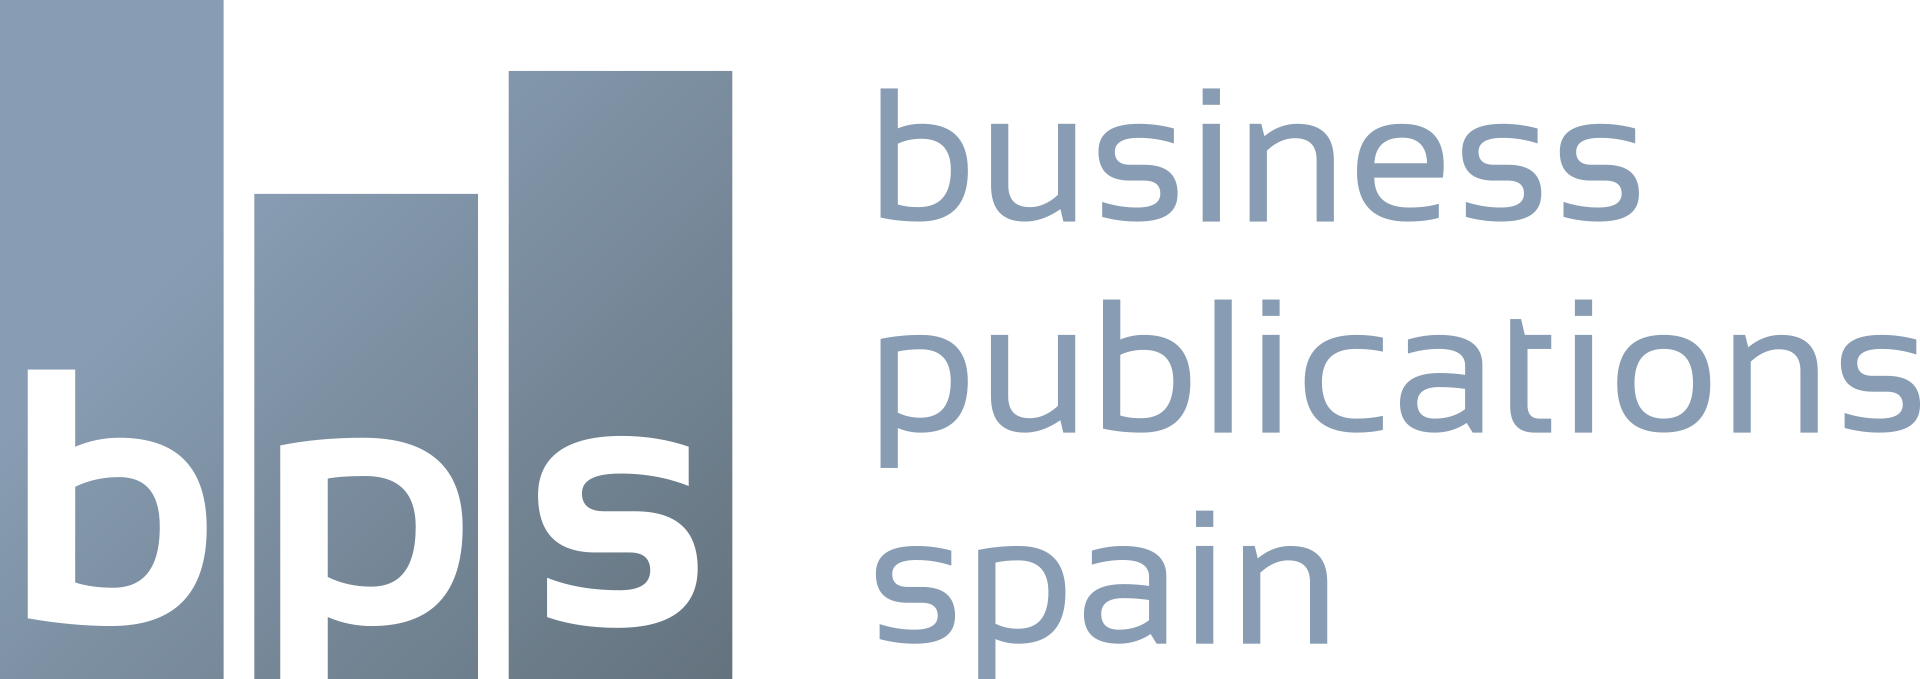 BusinessPublicationSpain_logo_tr-1